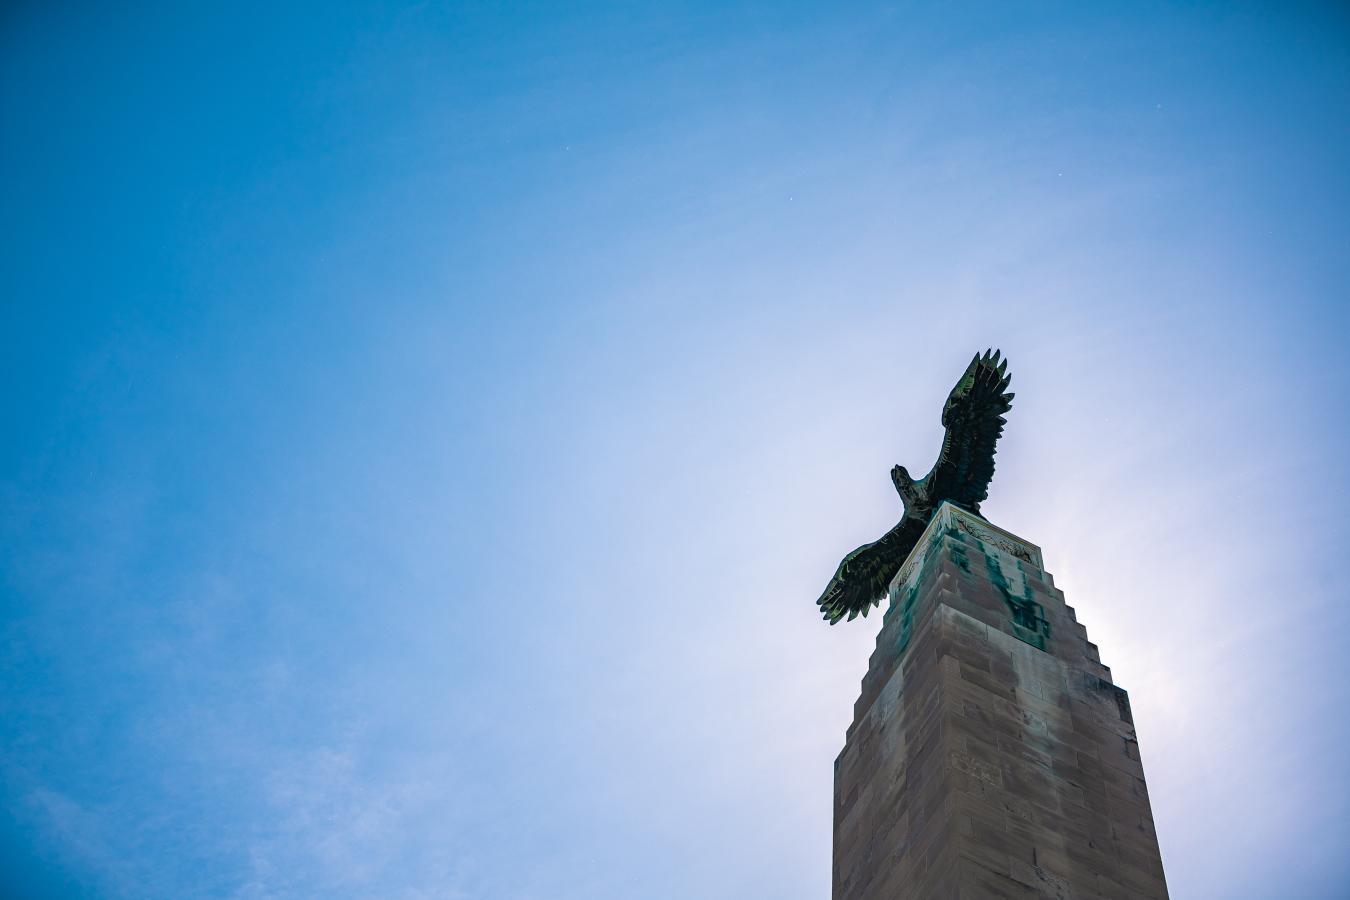 Eagle statue in Plattsburgh, NY